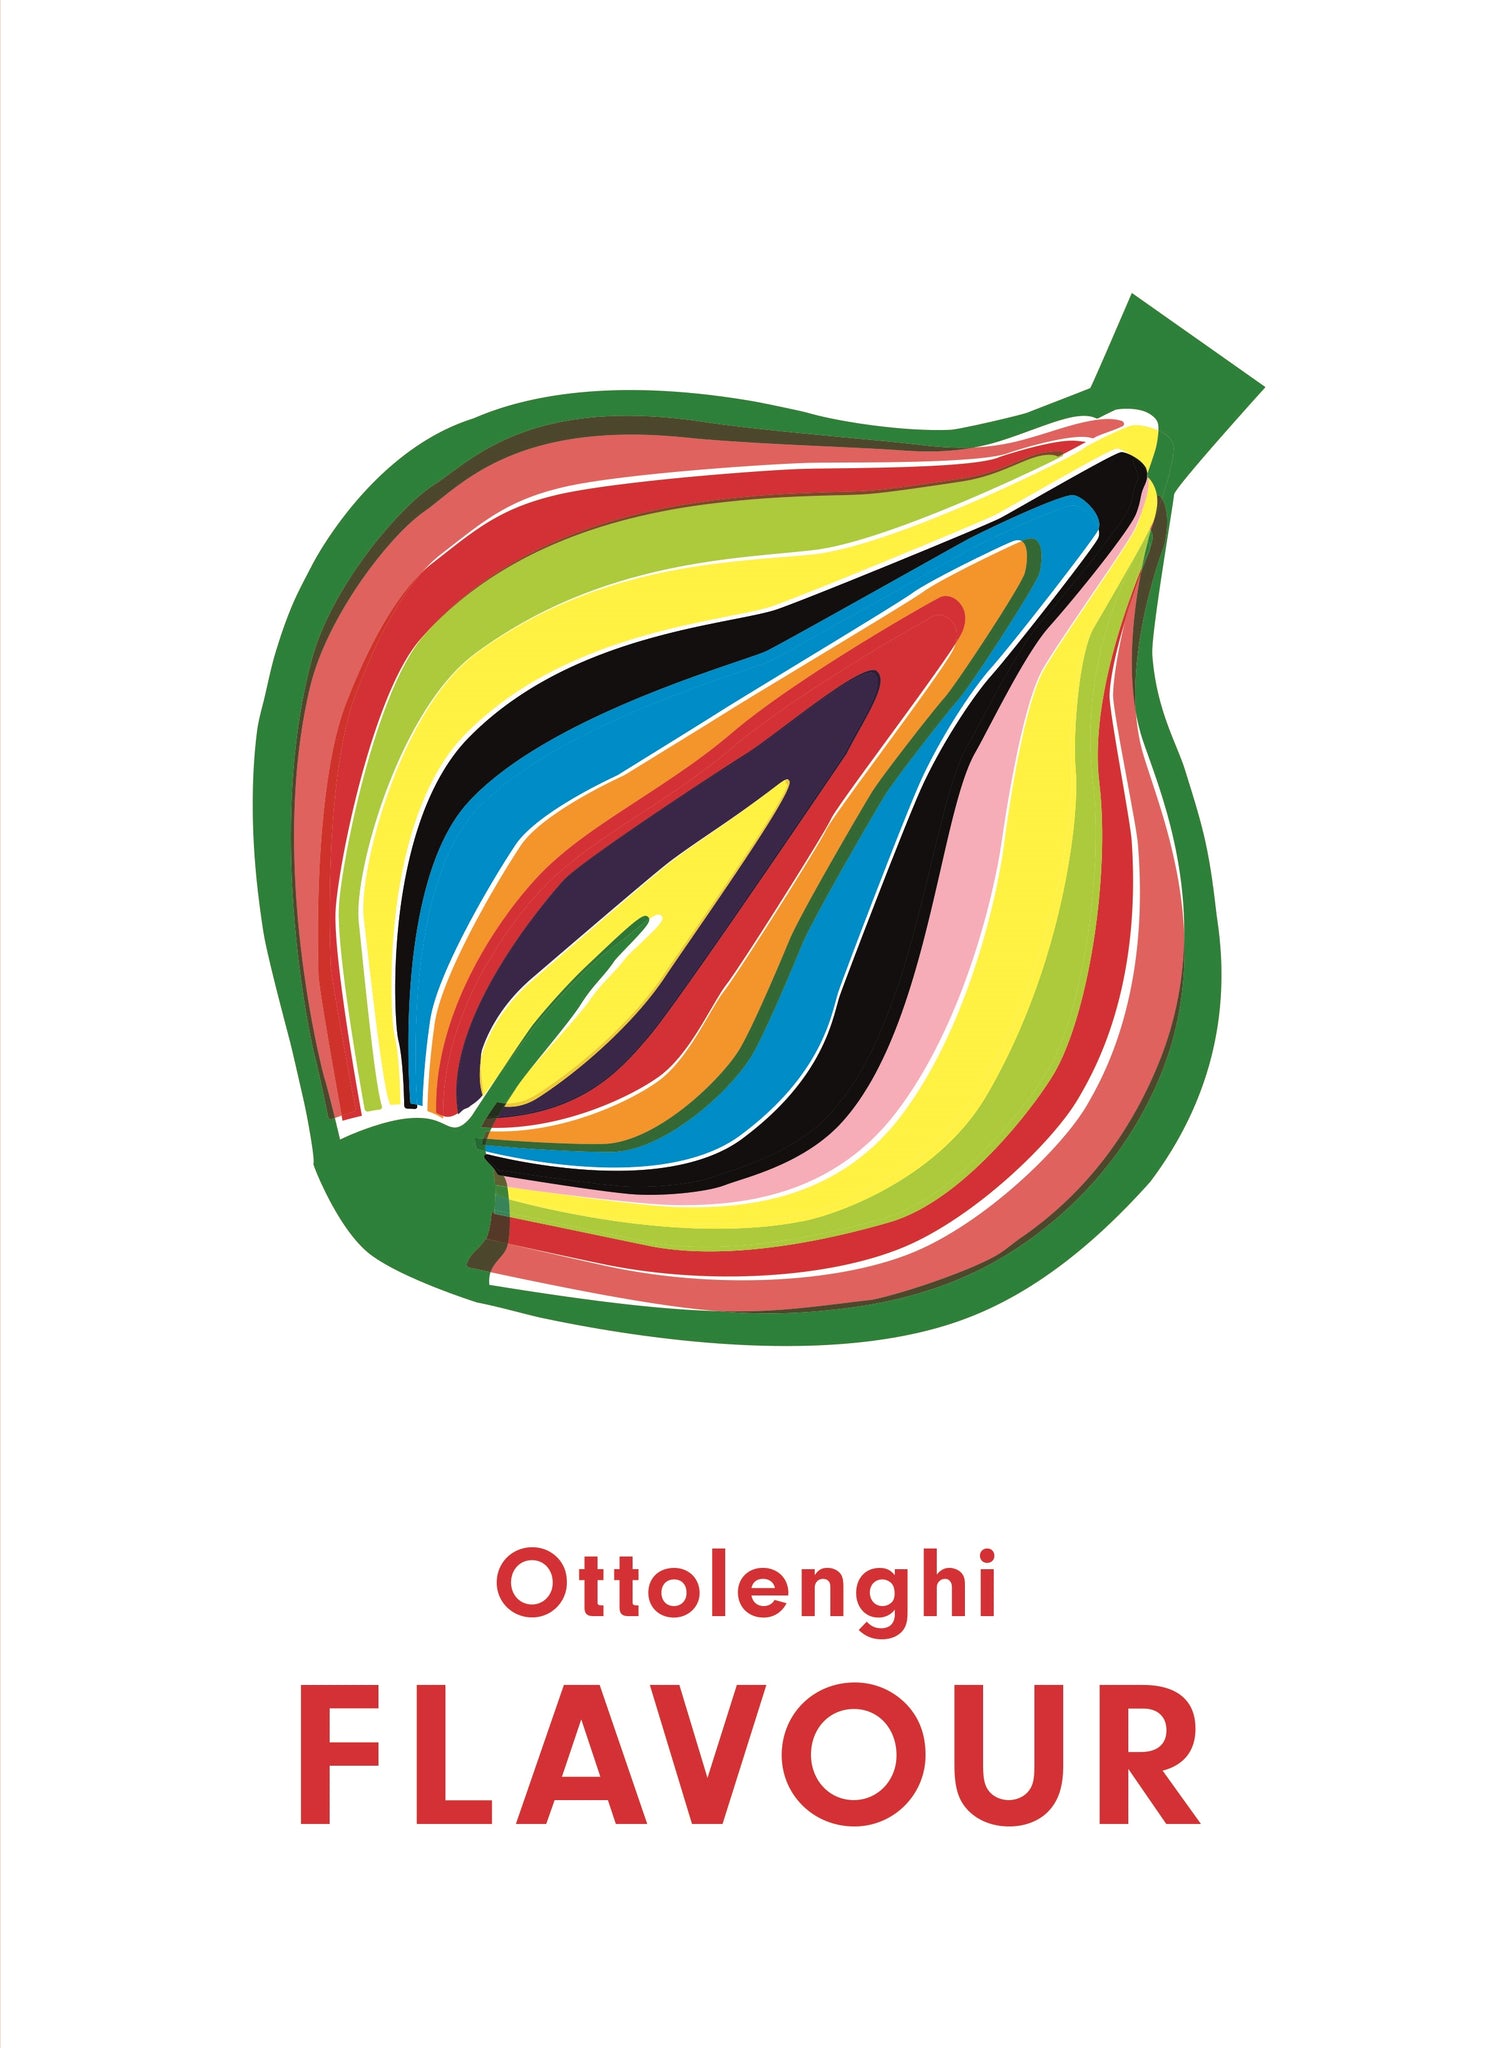 Flavour - Yotam Ottolenghi & Ixta Belfrage